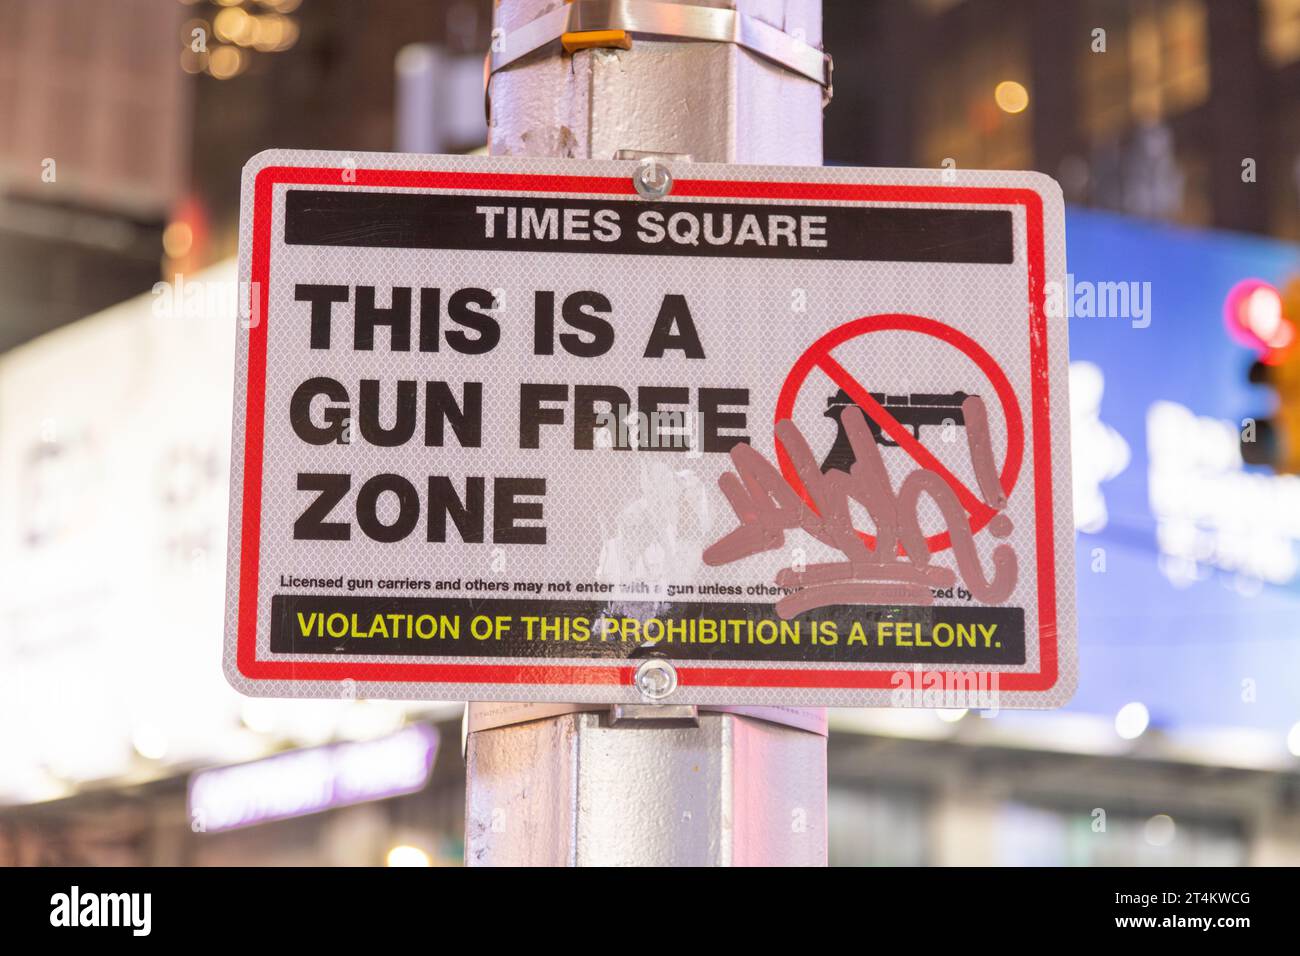 Gun free zone sign, Times Square, New York, United States of America. Stock Photo